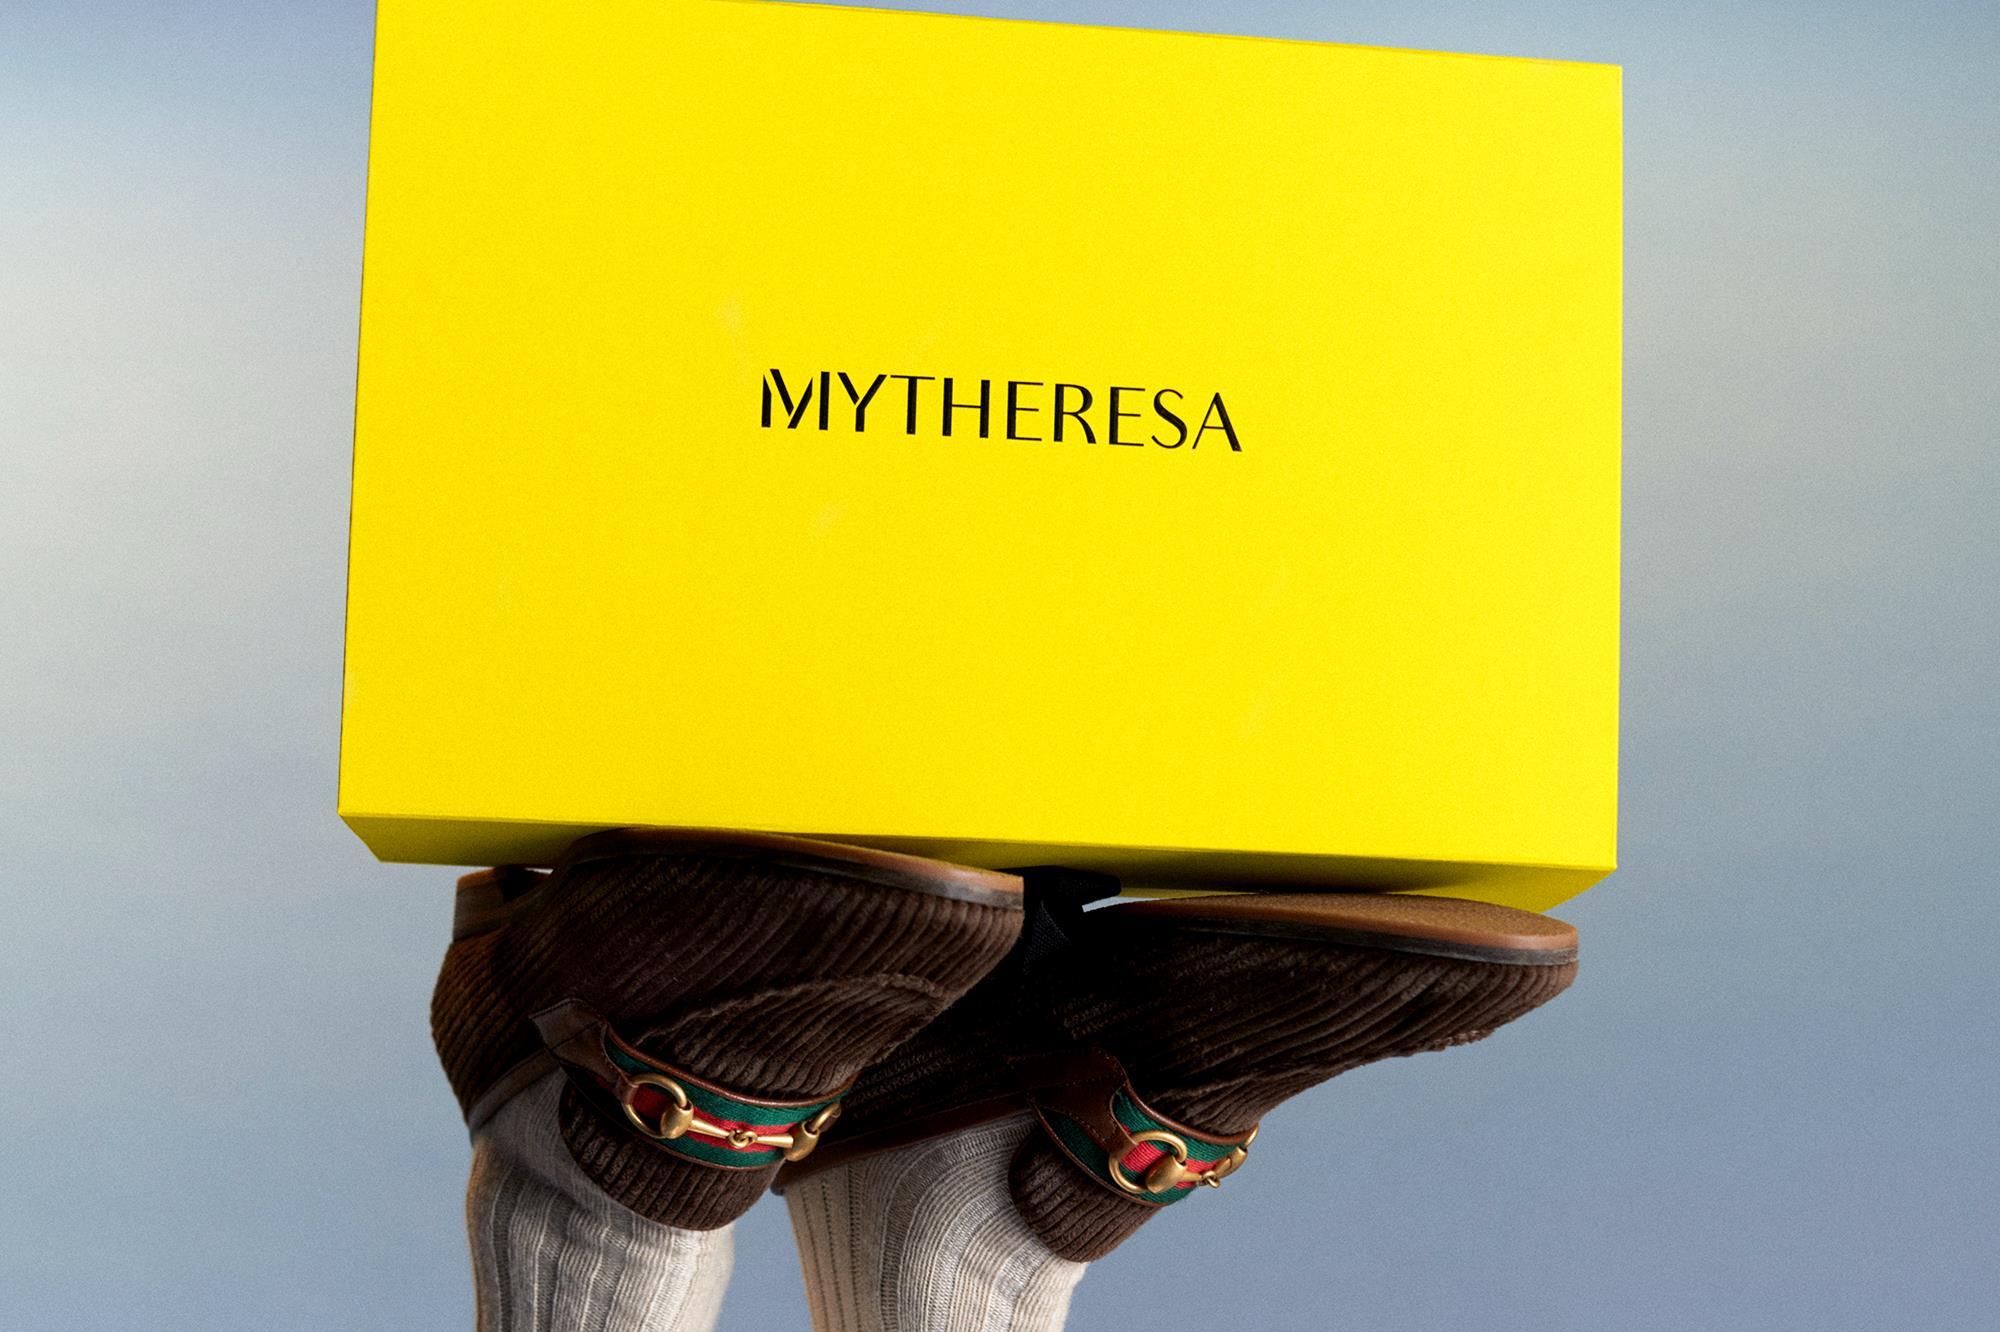 Luxury Fashion Platform Mytheresa Aims to Go Public at $1.58 Billion  Valuation